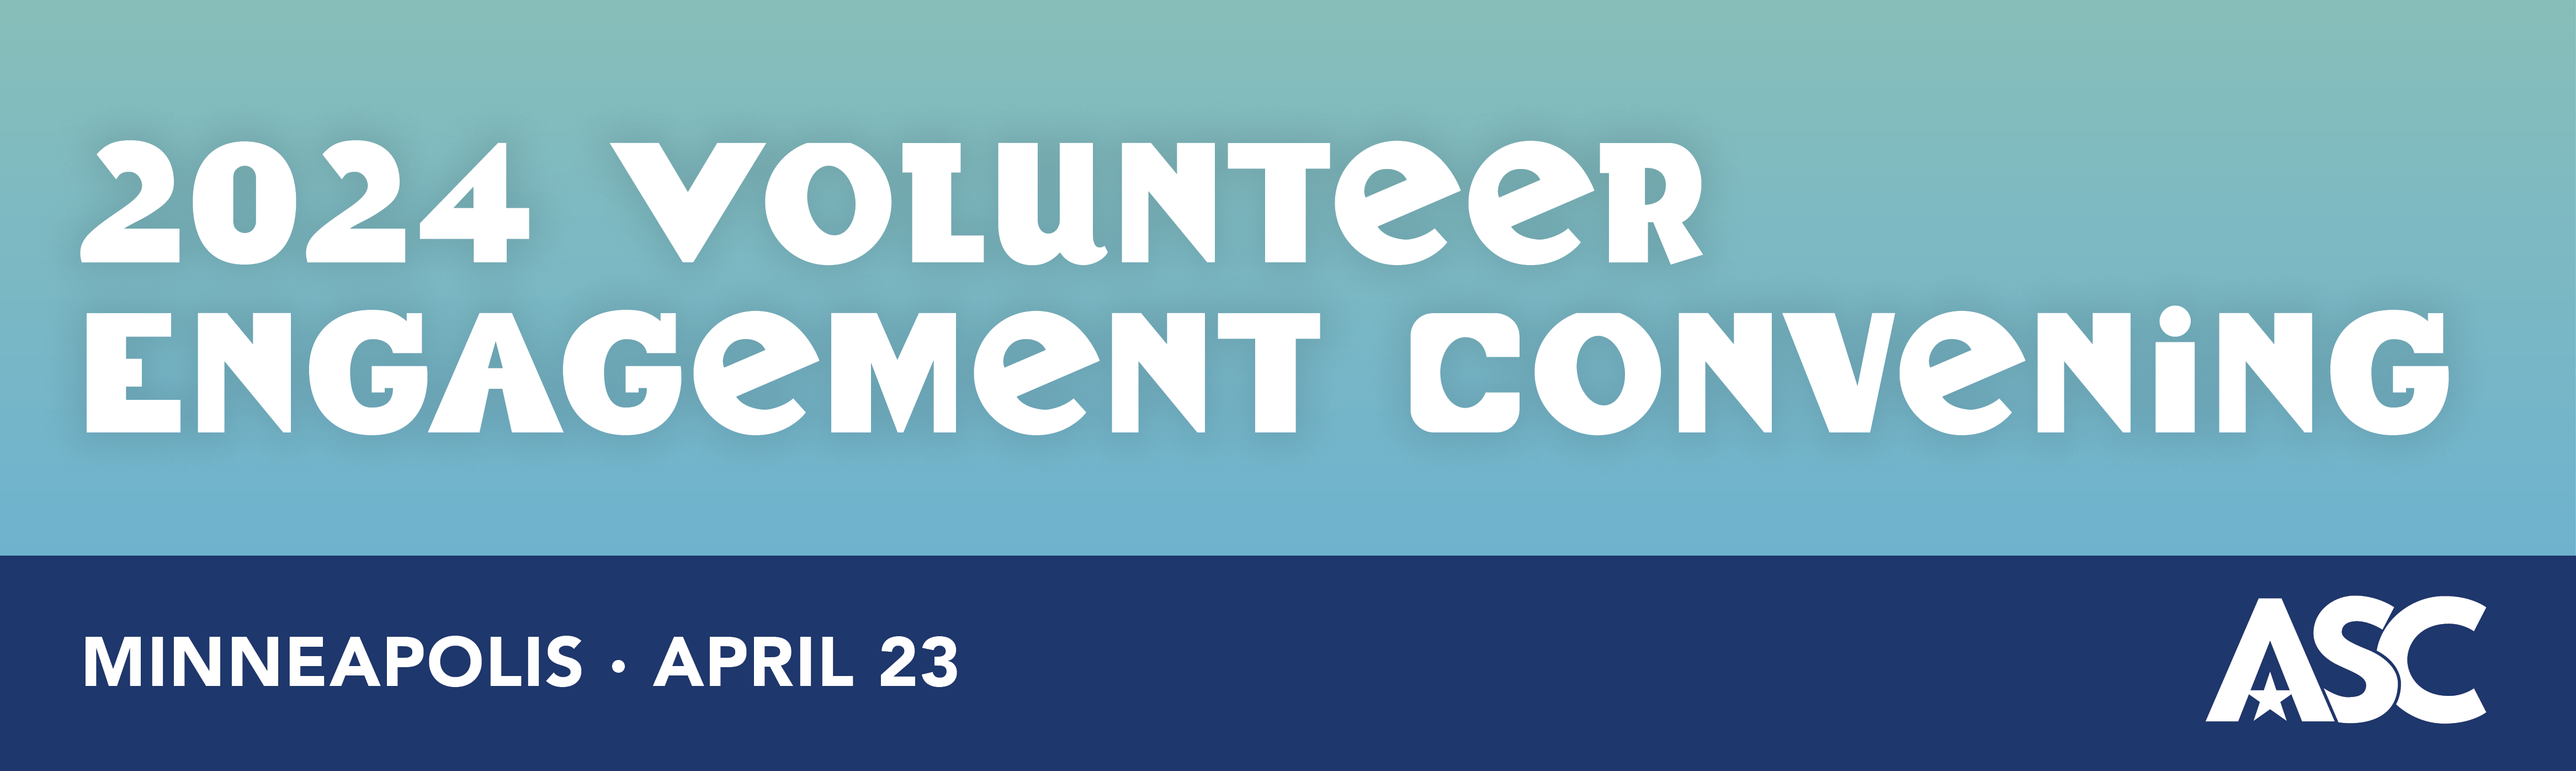 2024 Volunteer Engagement Convening